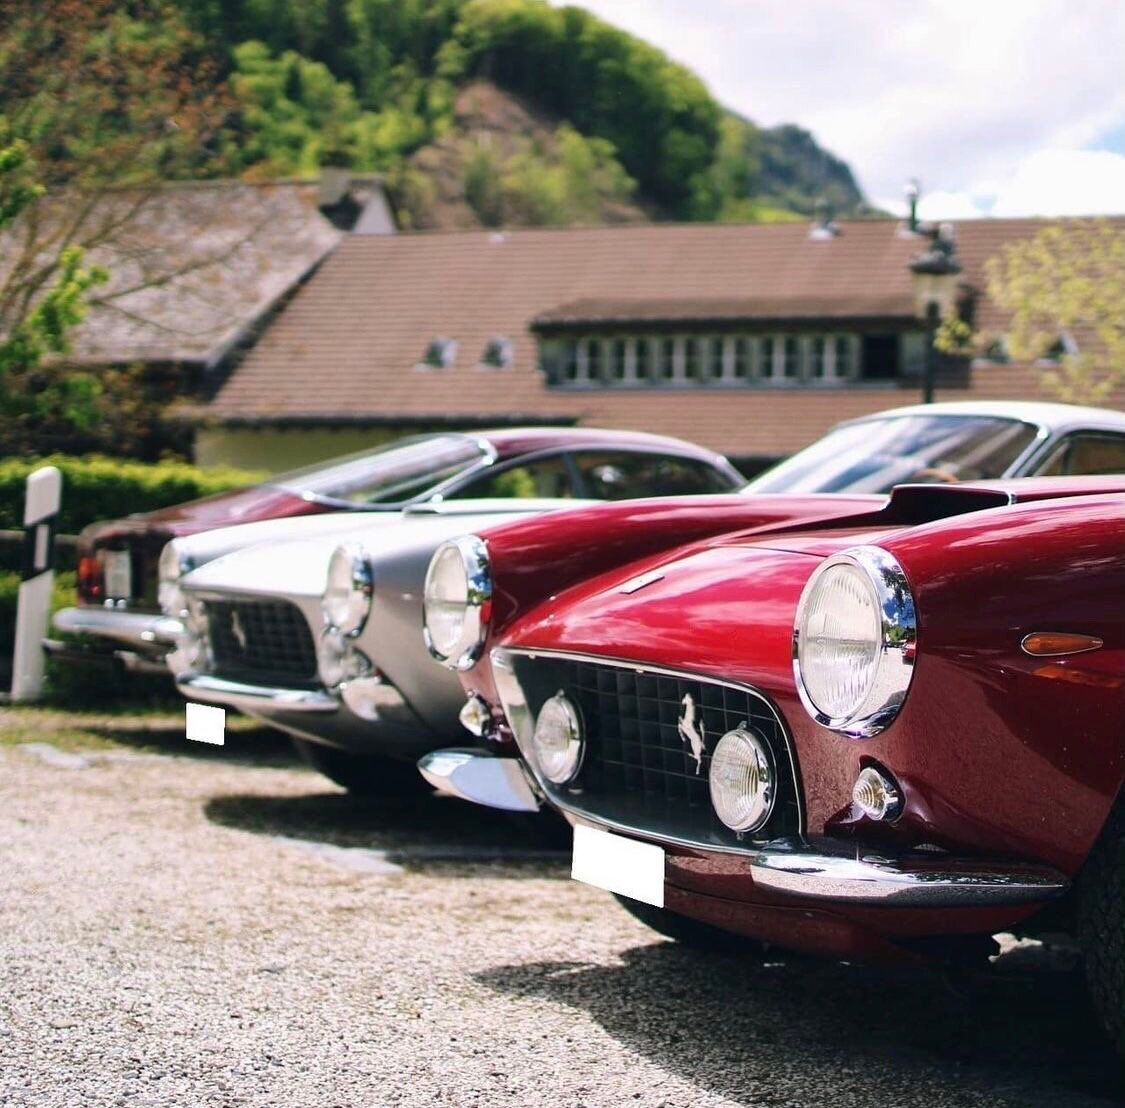 Stunning Classic Ferrari’s enjoying the summer 💯 Thanks to Ferrari Basel for the photos 👍🙏

Enzari.com #ferrari #ferrariclassiche #ferraribasel #nikihaslerag #nikihaslerferrari #cars #style #enzari